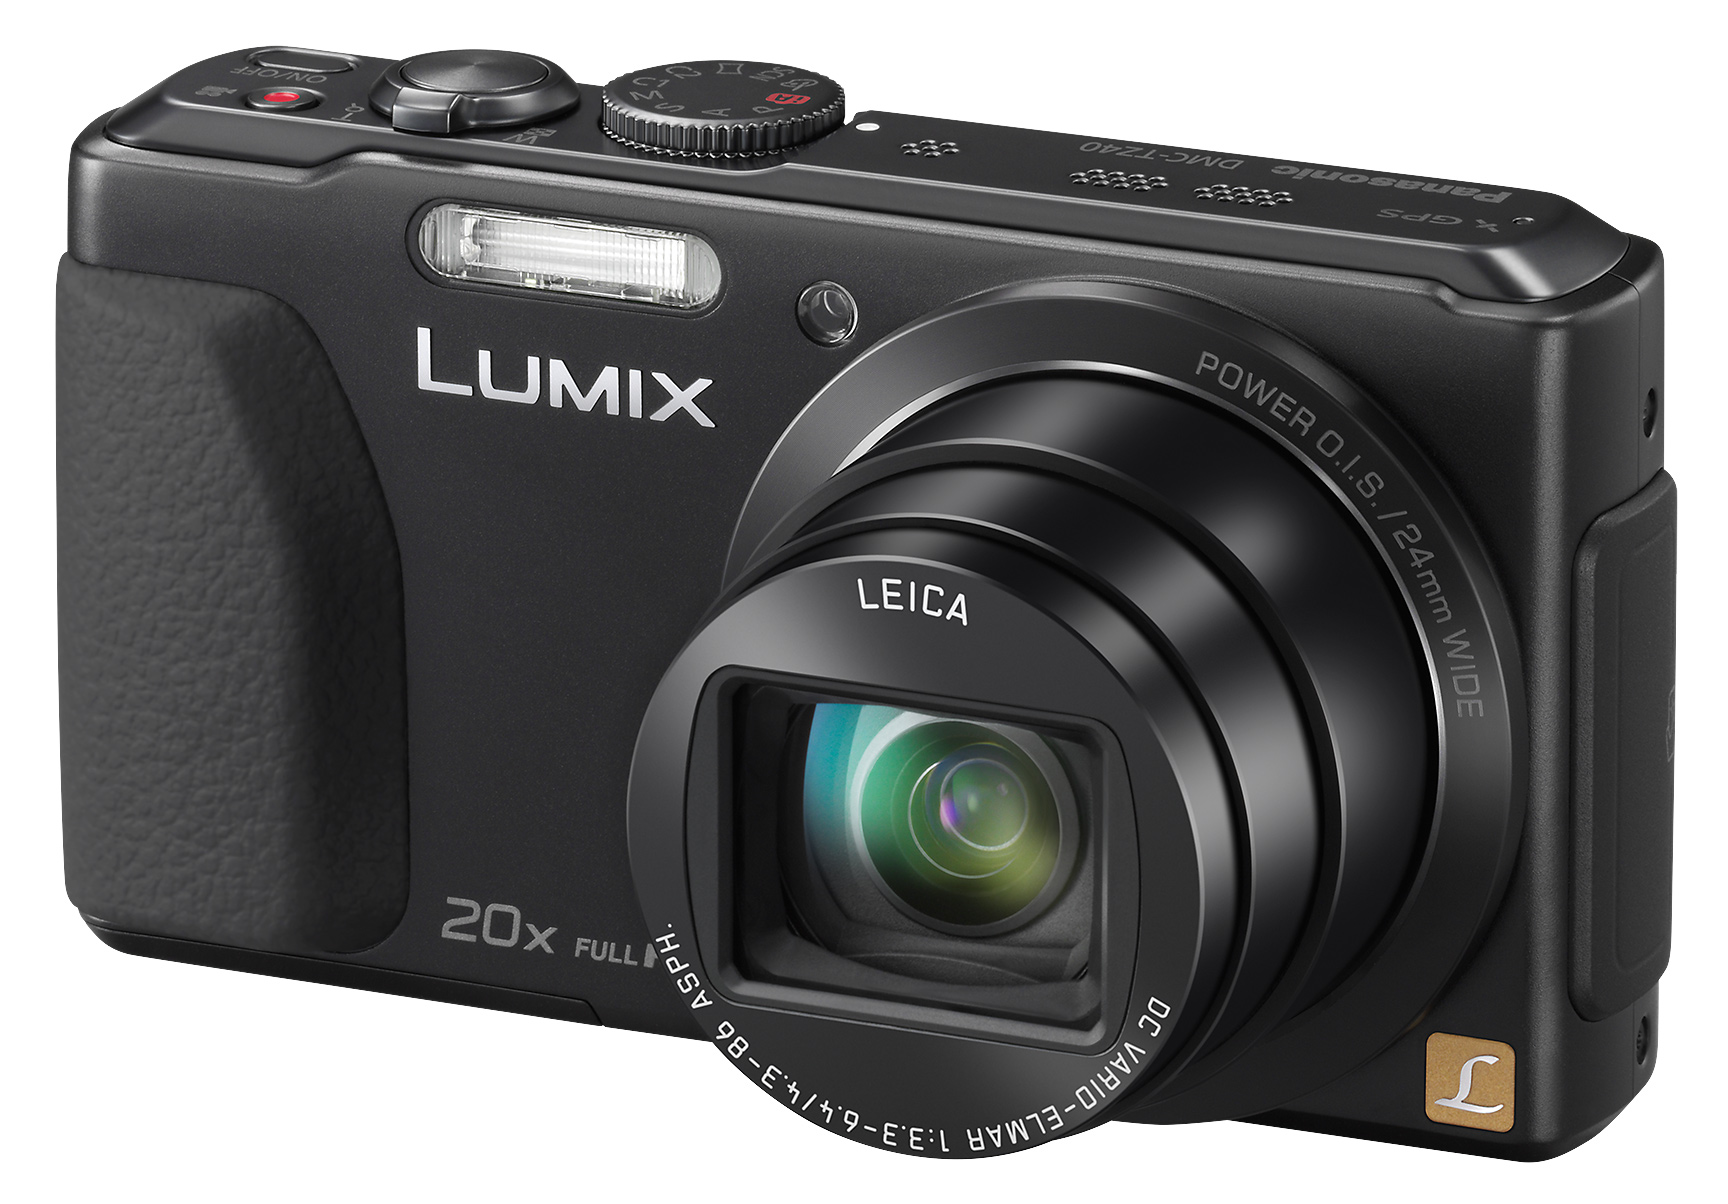 Panasonic Lumix TZ40 Digital Camera